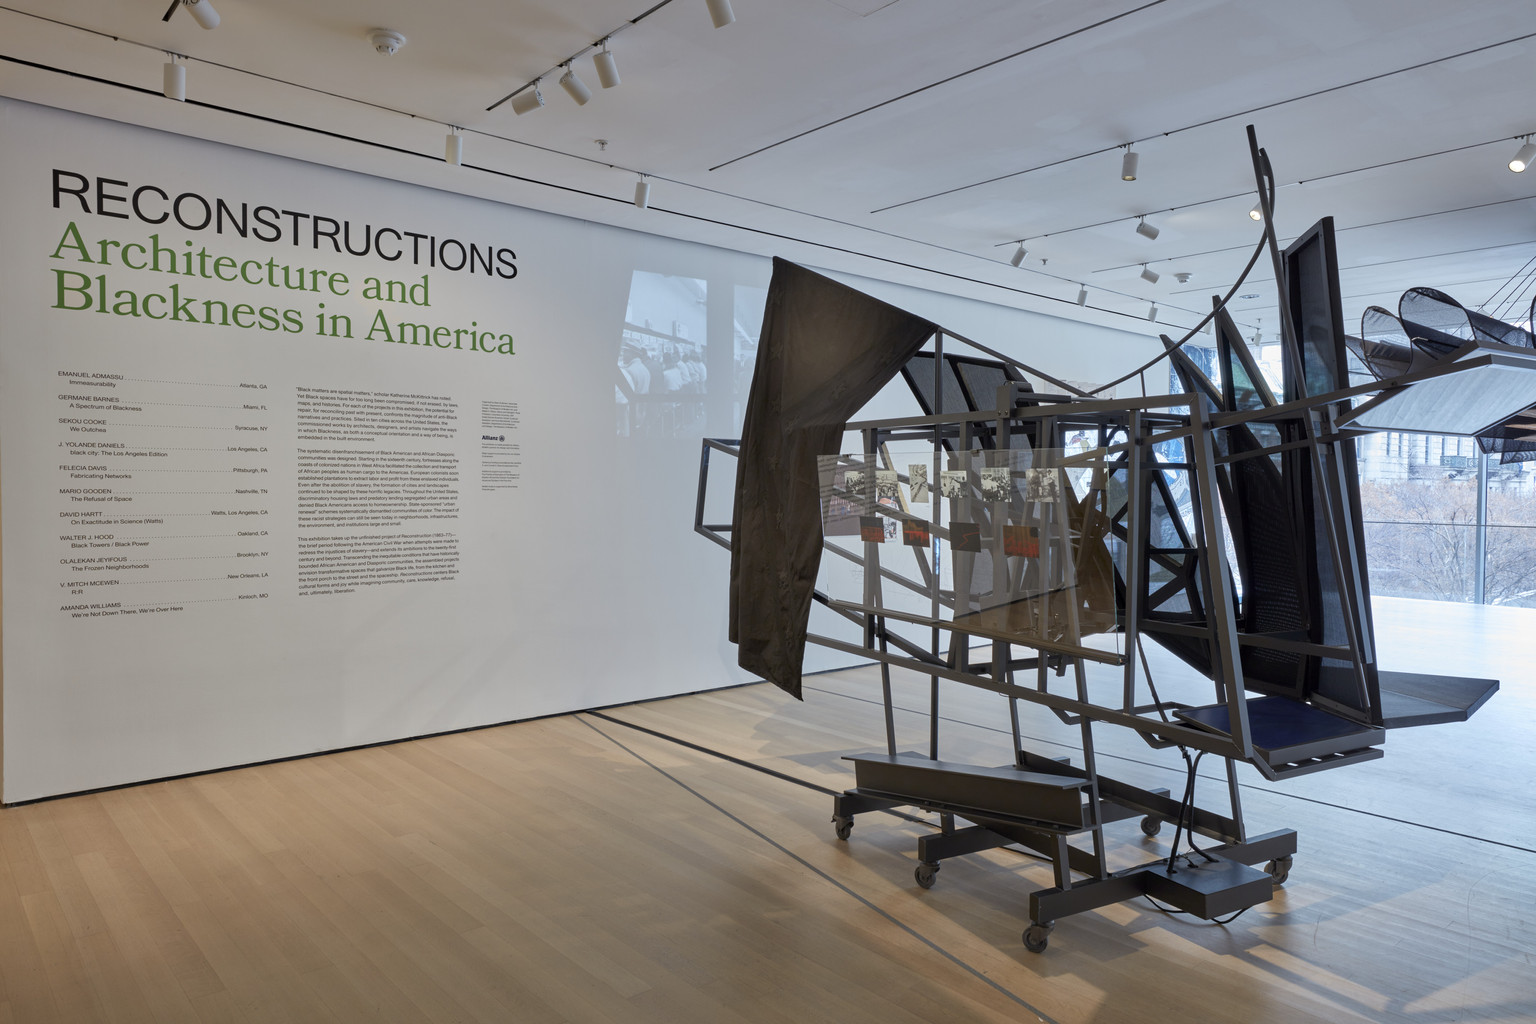 Architecture and Blackness in America | MoMA